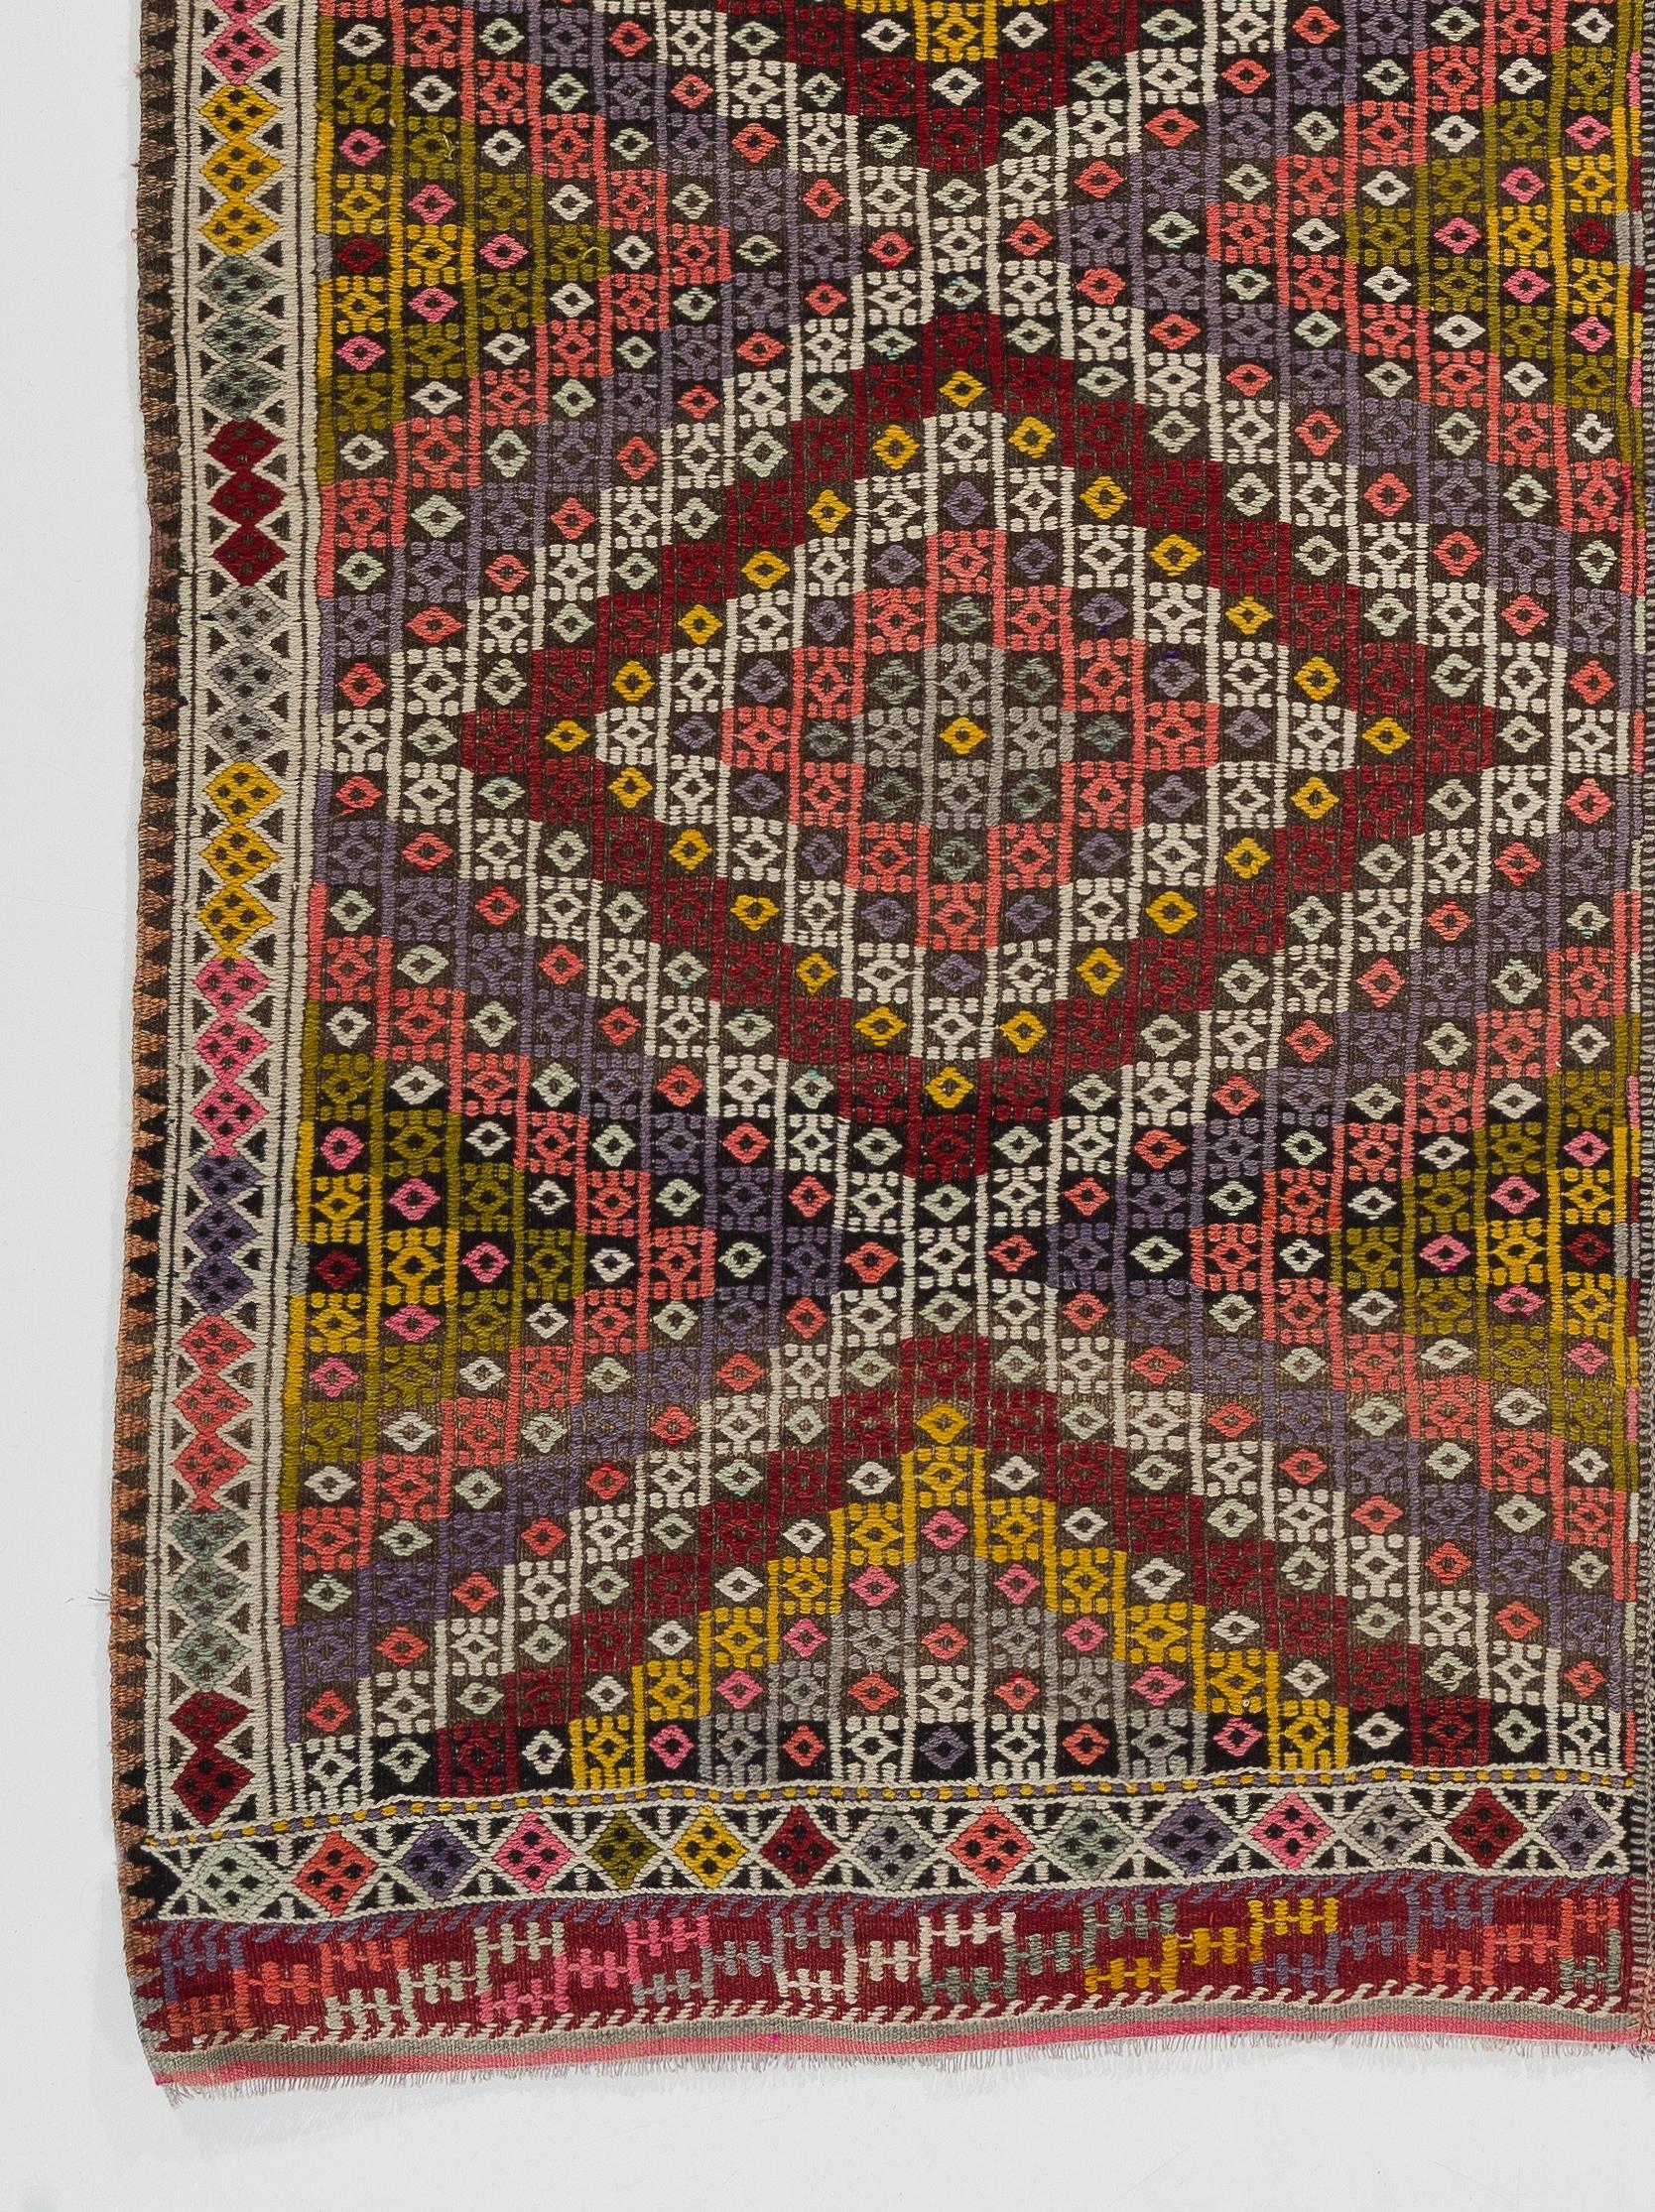 20th Century 6x8 Ft Multicolored Hand-Woven Turkish Jijim Kilim. Vintage Geometric Design Rug For Sale